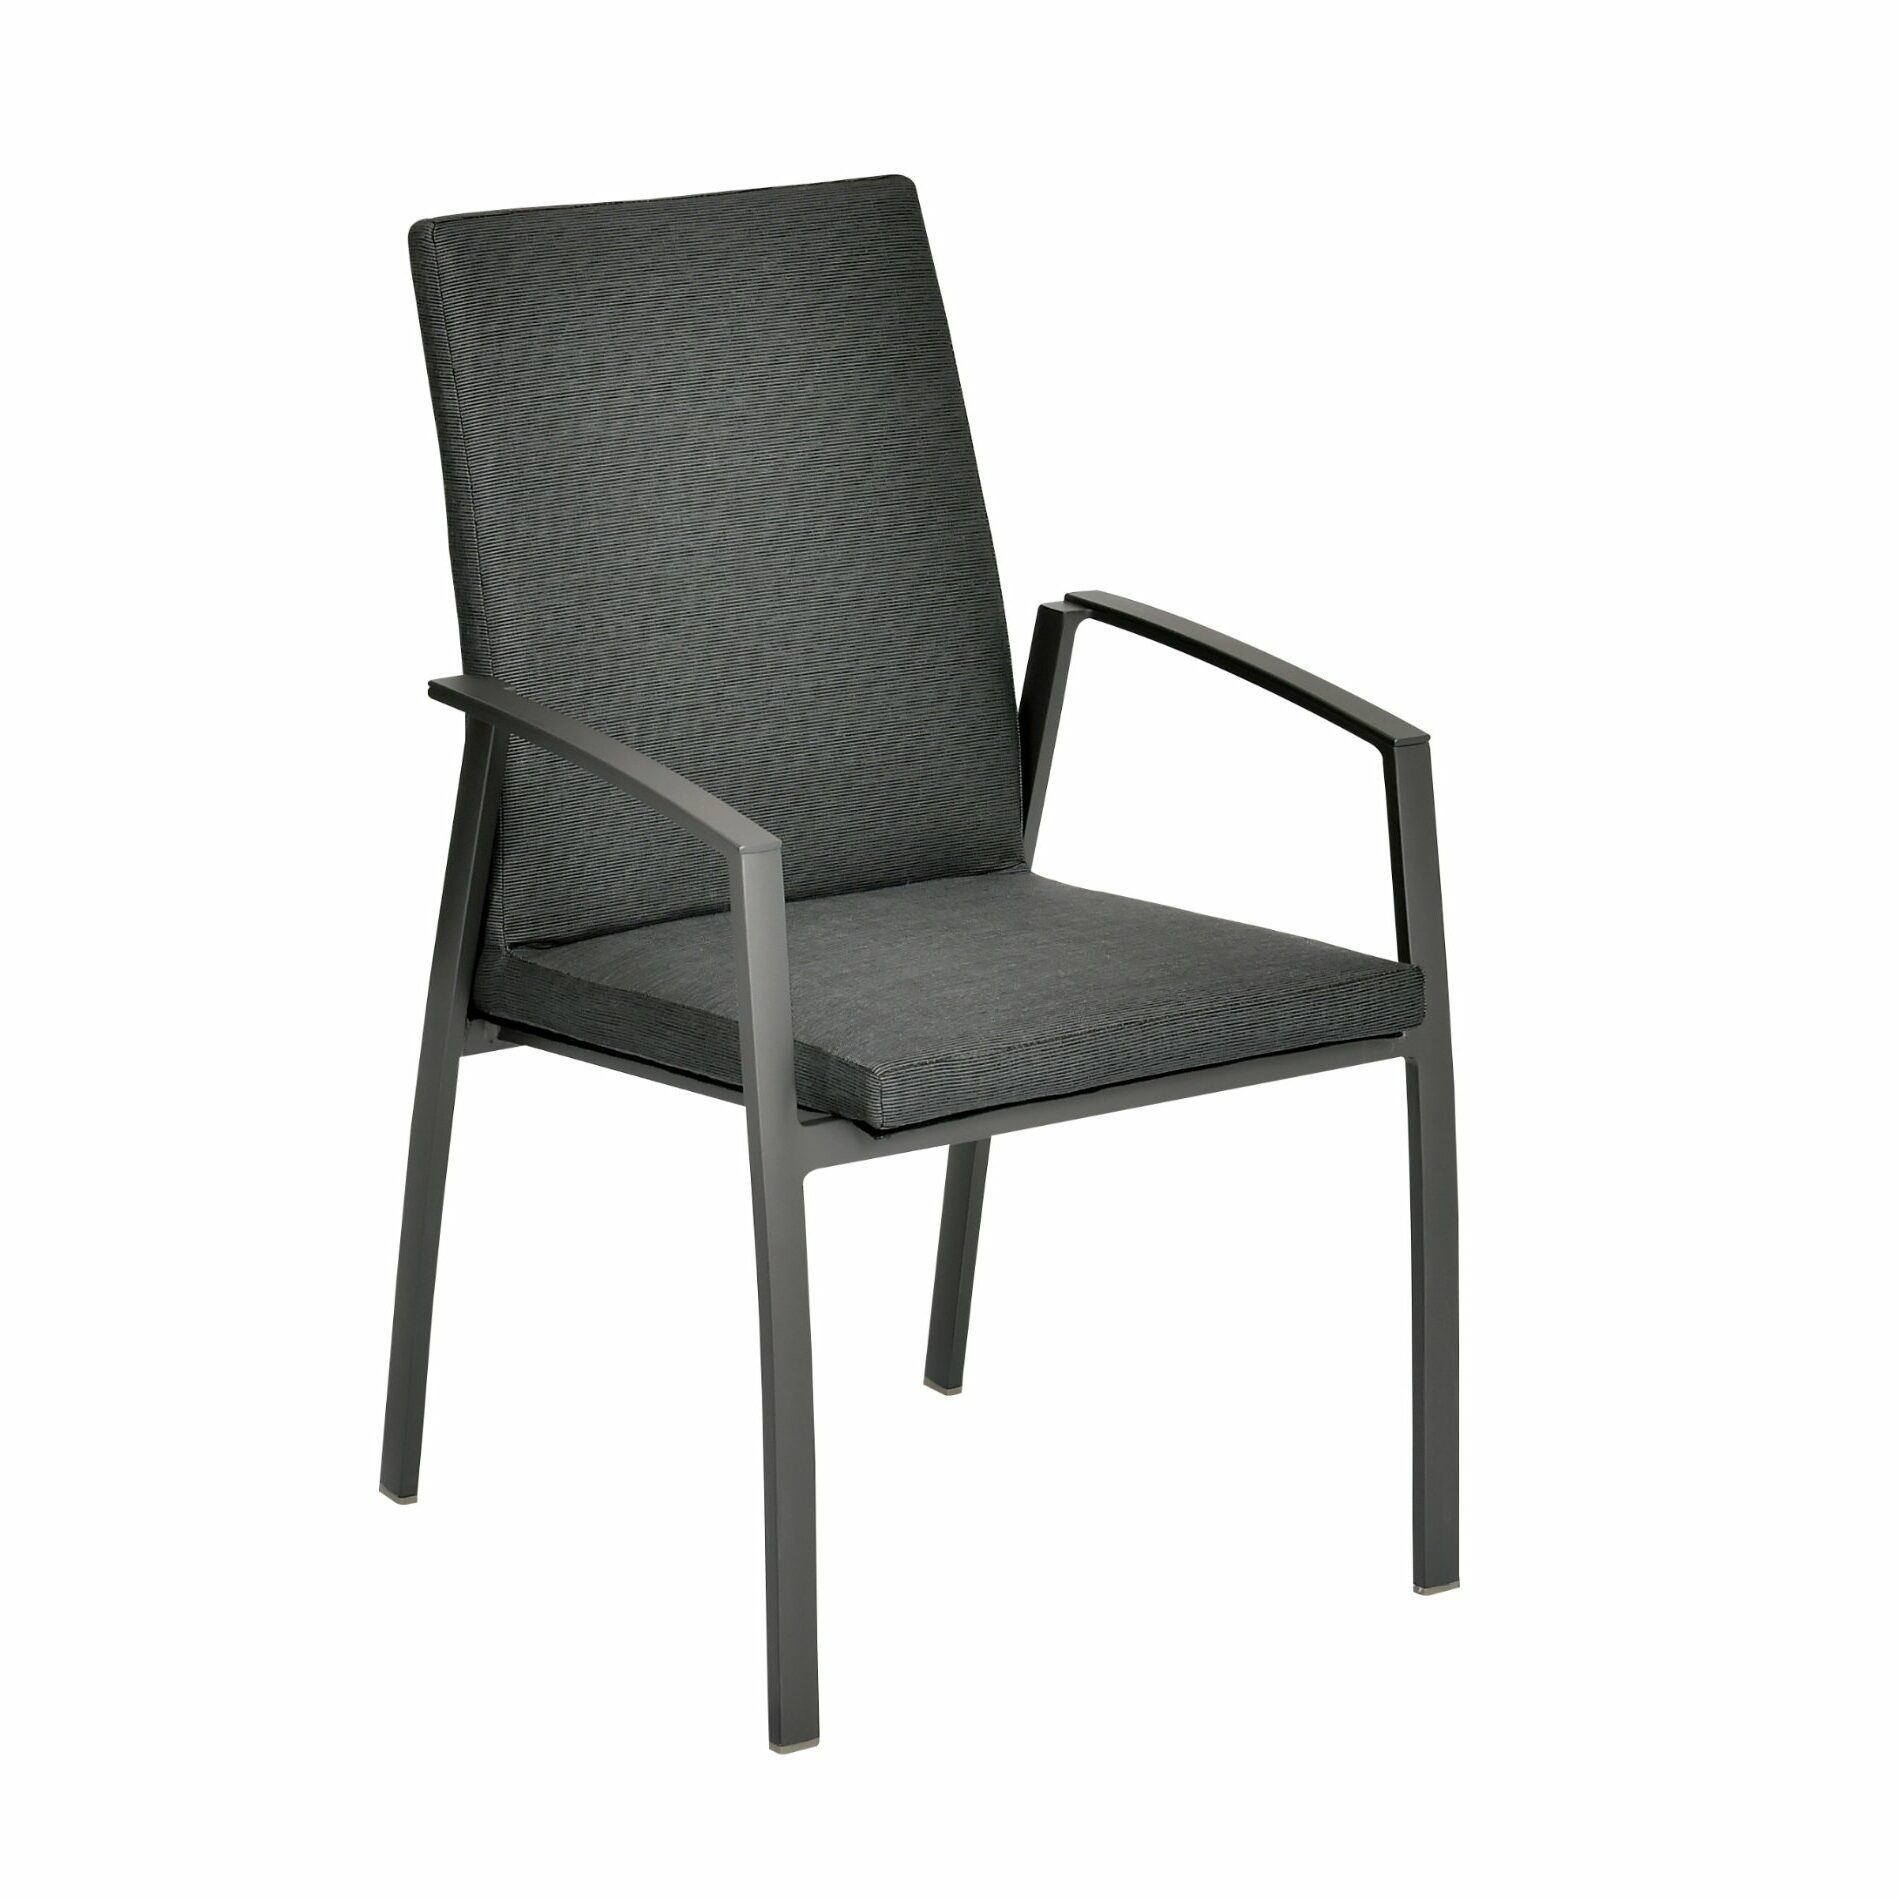 SIT Mobilia "Portimao" Stapelstuhl, Gestell Aluminium anthrazit, Sitzfläche Textilgewebe Eden black, gepolstert